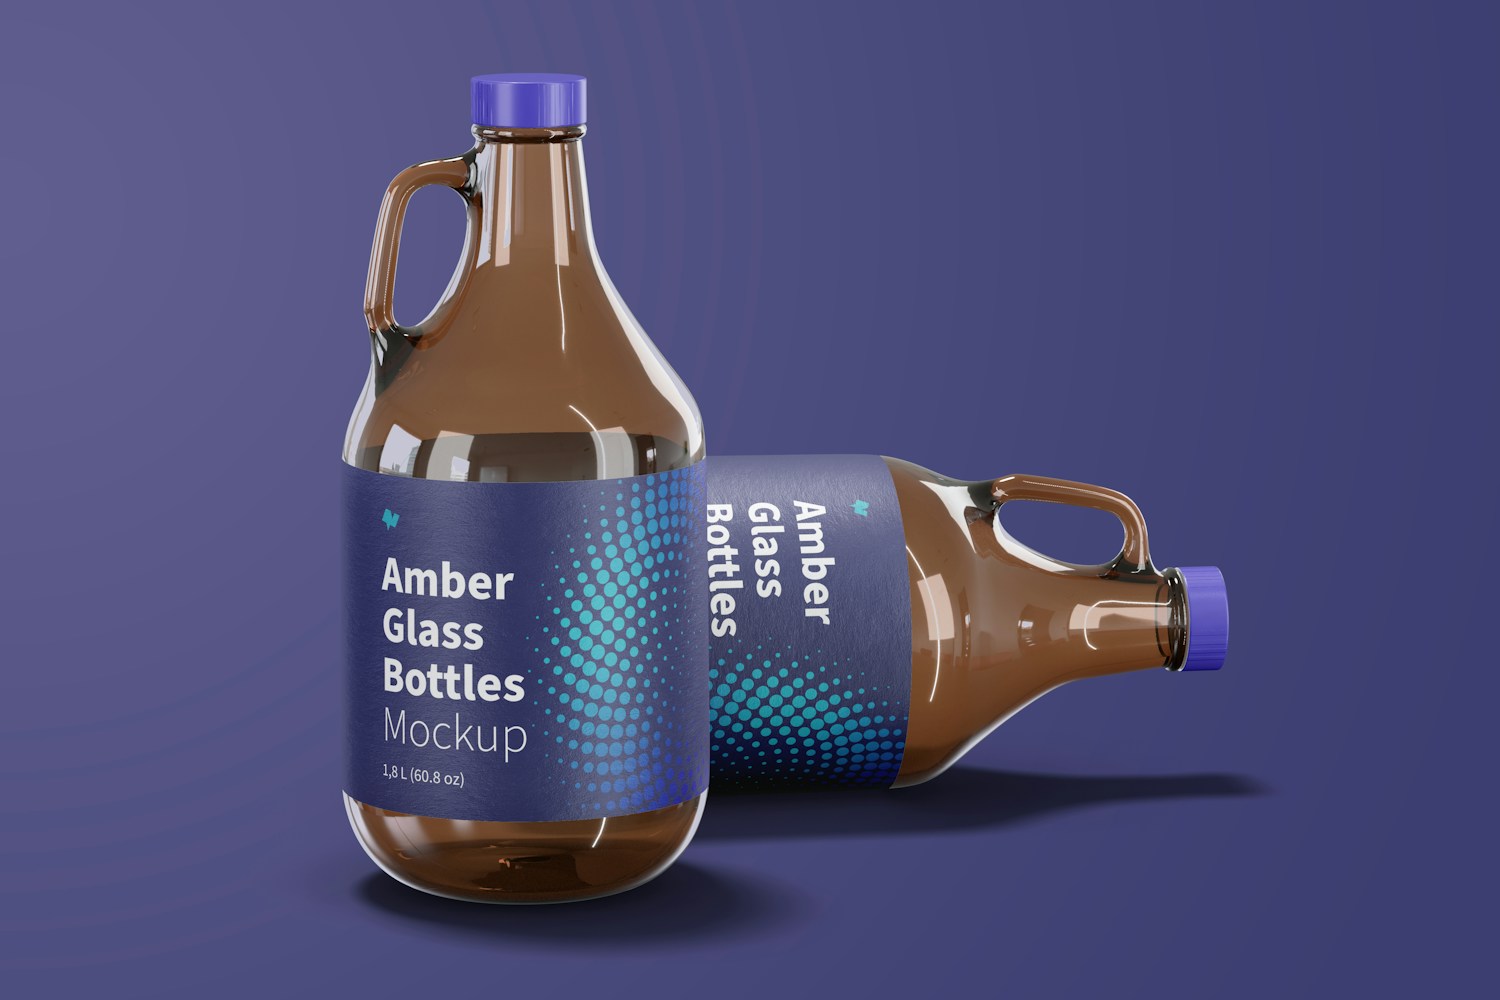 Amber Glass Bottles with Handle Jar Mockup